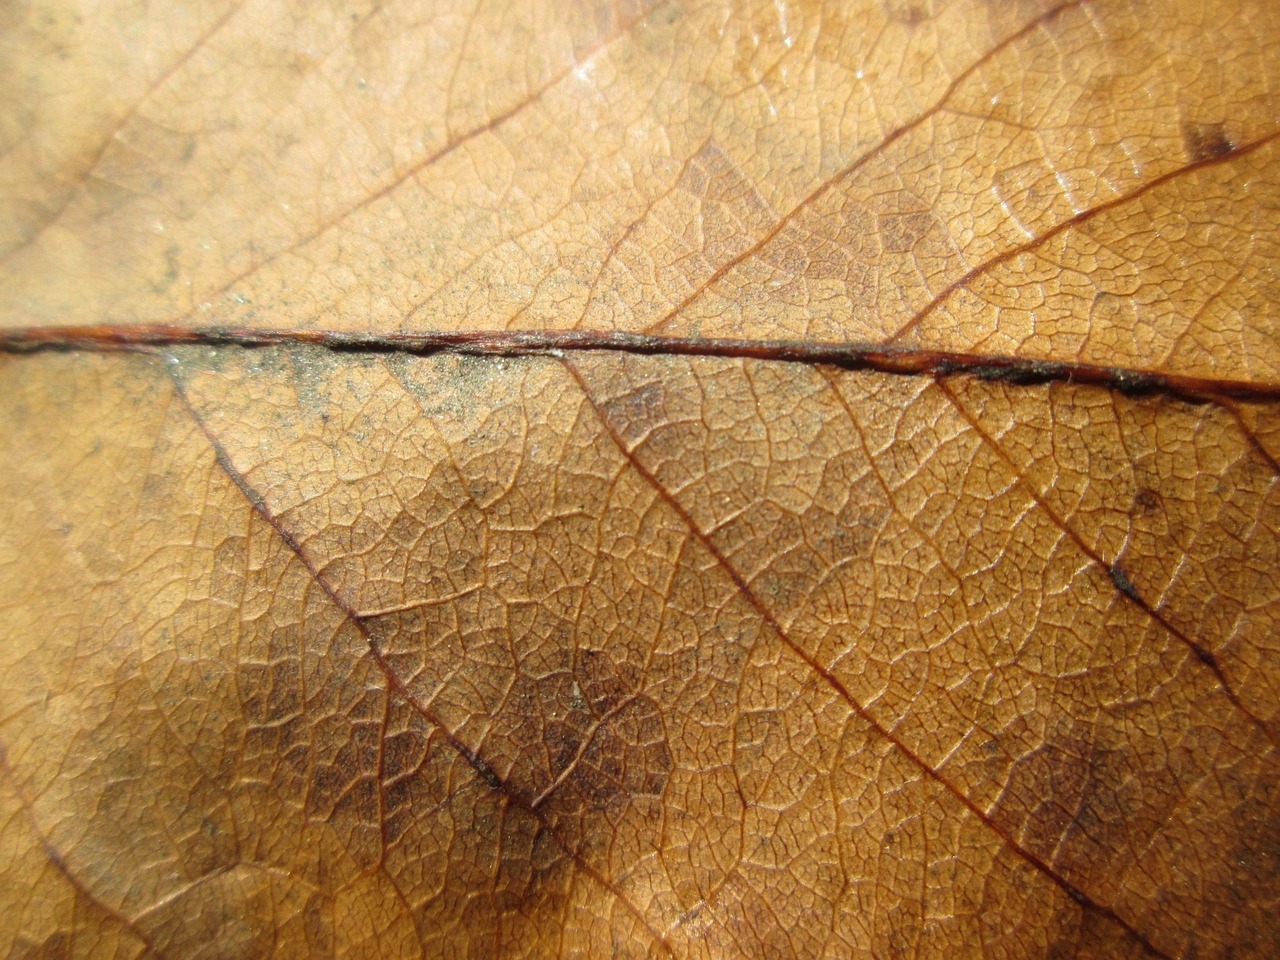 a close up of a leaf on a table, a macro photograph, renaissance, skin texture like a brain, ocher details, grain”